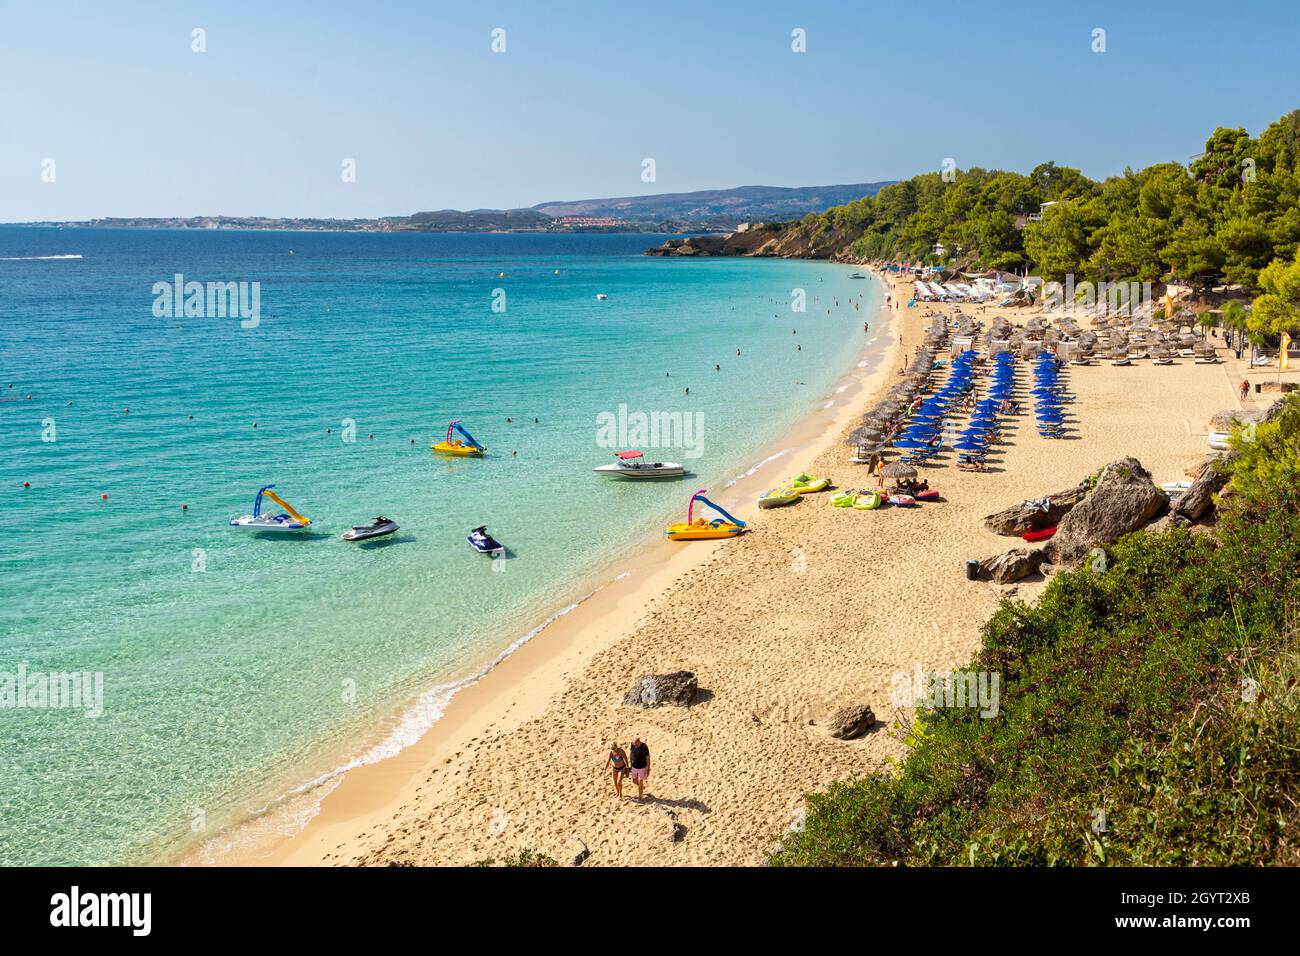 The clear waters of Makris Gialios Beach - a popular tourist spot near Argostoli, Kefalonia, Ionian Islands, Greece Stock Photo